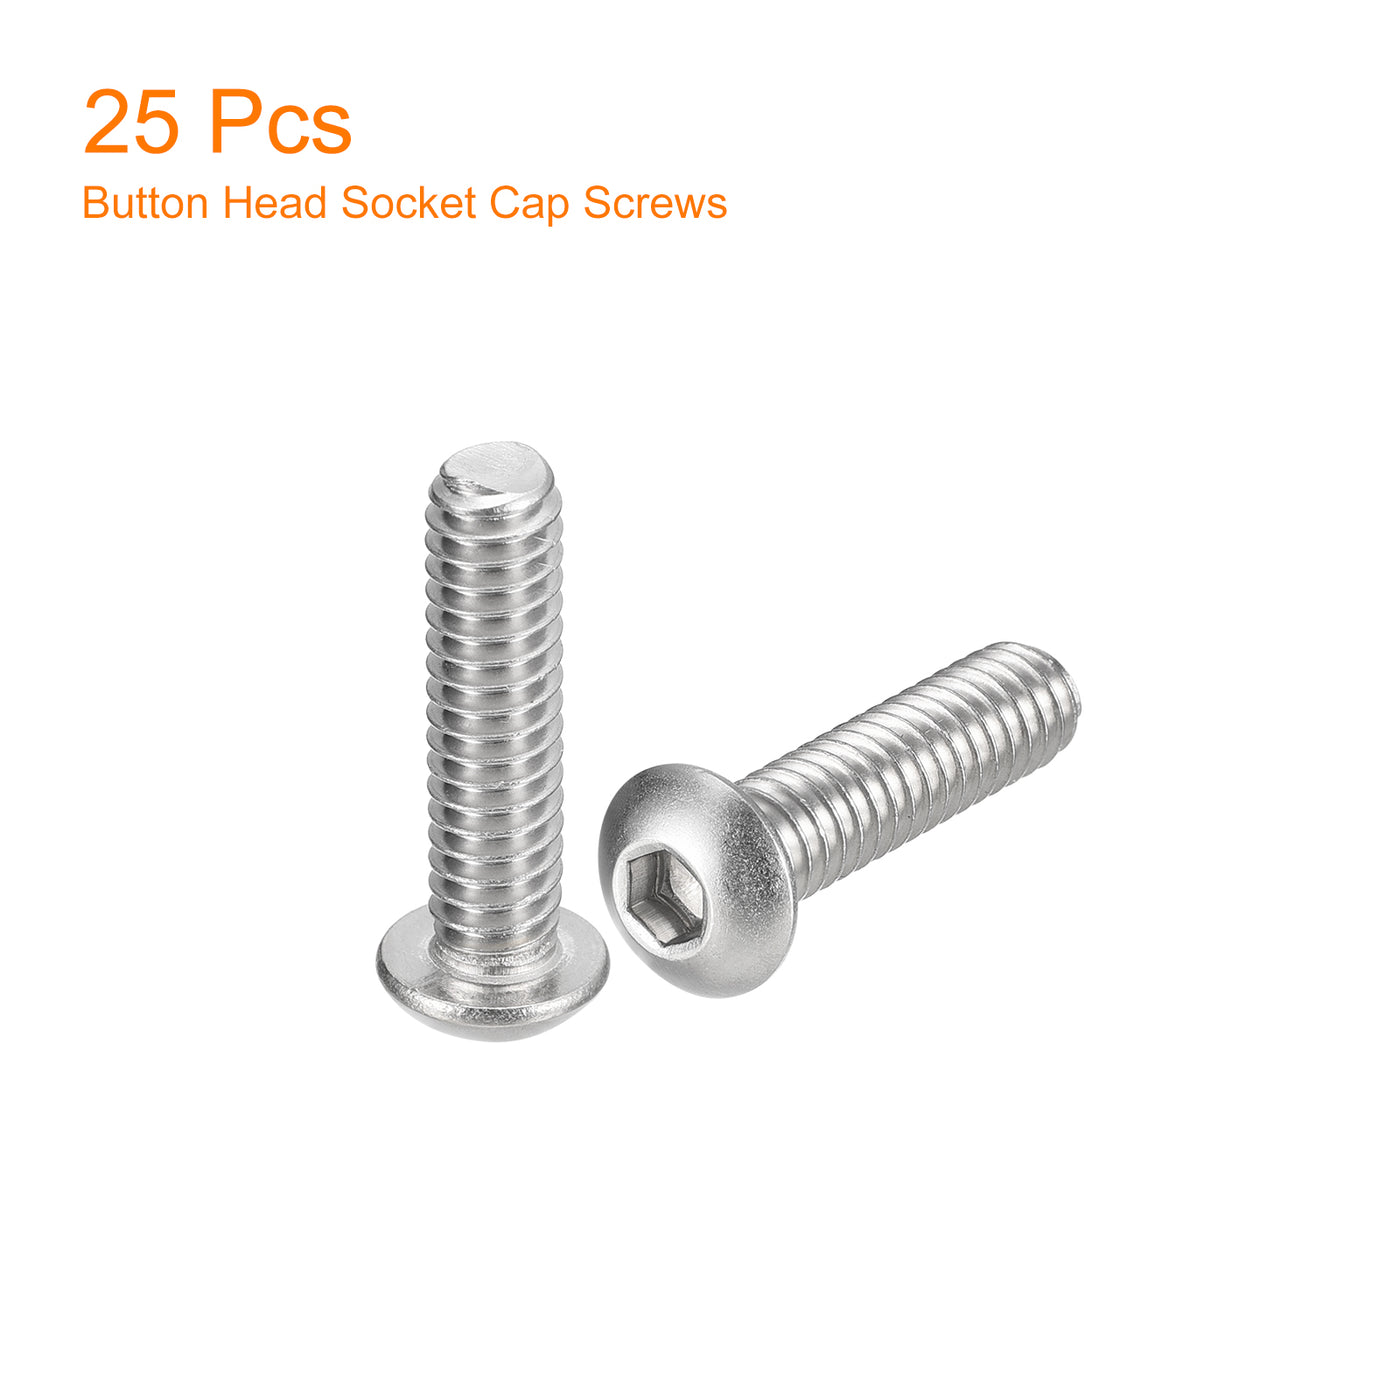 uxcell Uxcell 1/4-20x1" Button Head Socket Cap Screws, 25pcs 304 Stainless Steel Screws